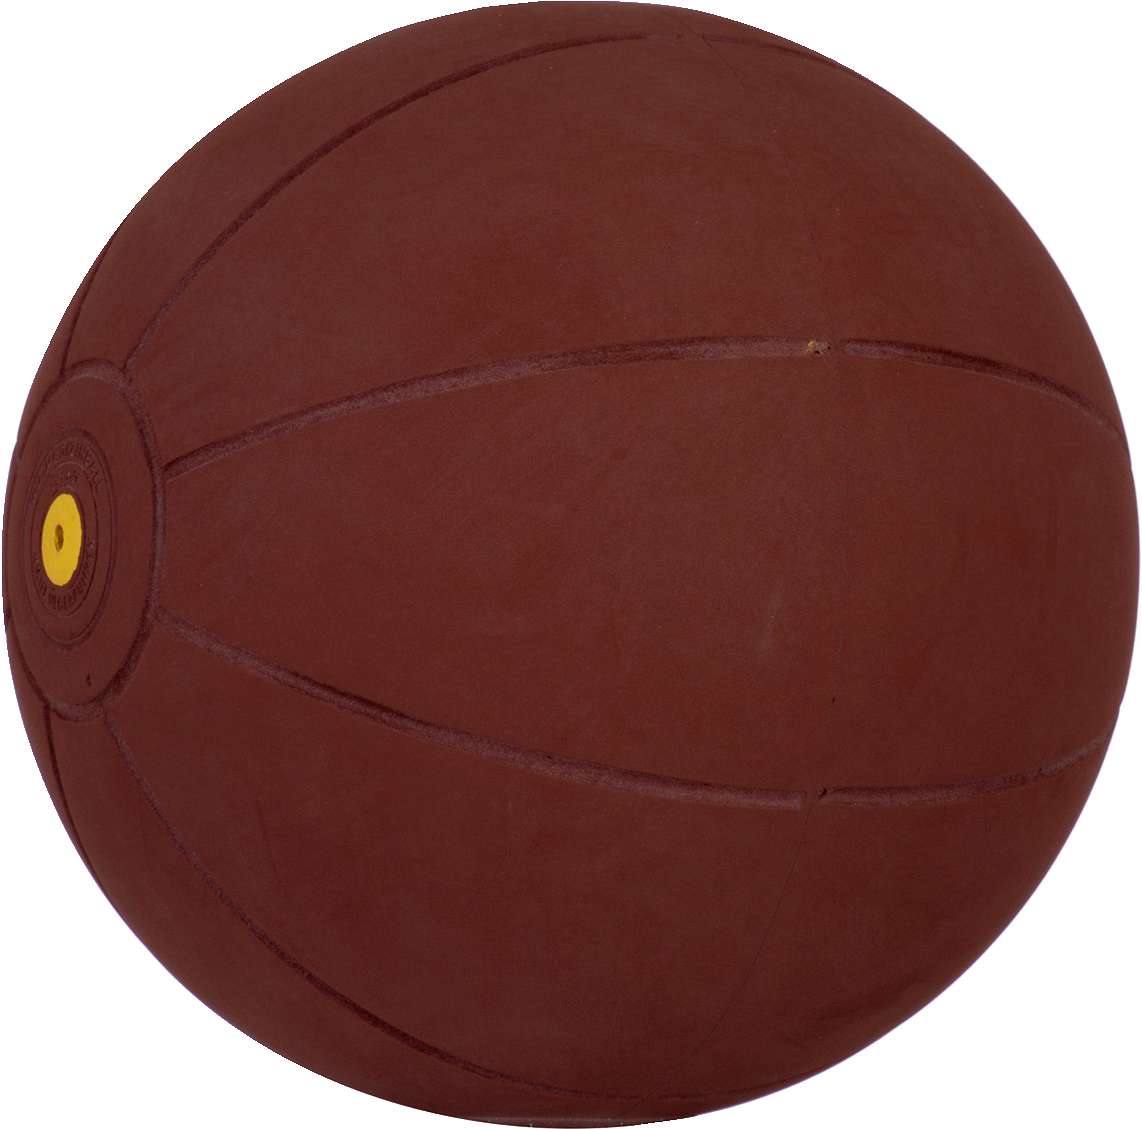 WV Medizinball, 2 kg, ø 27 cm, Braun von WV